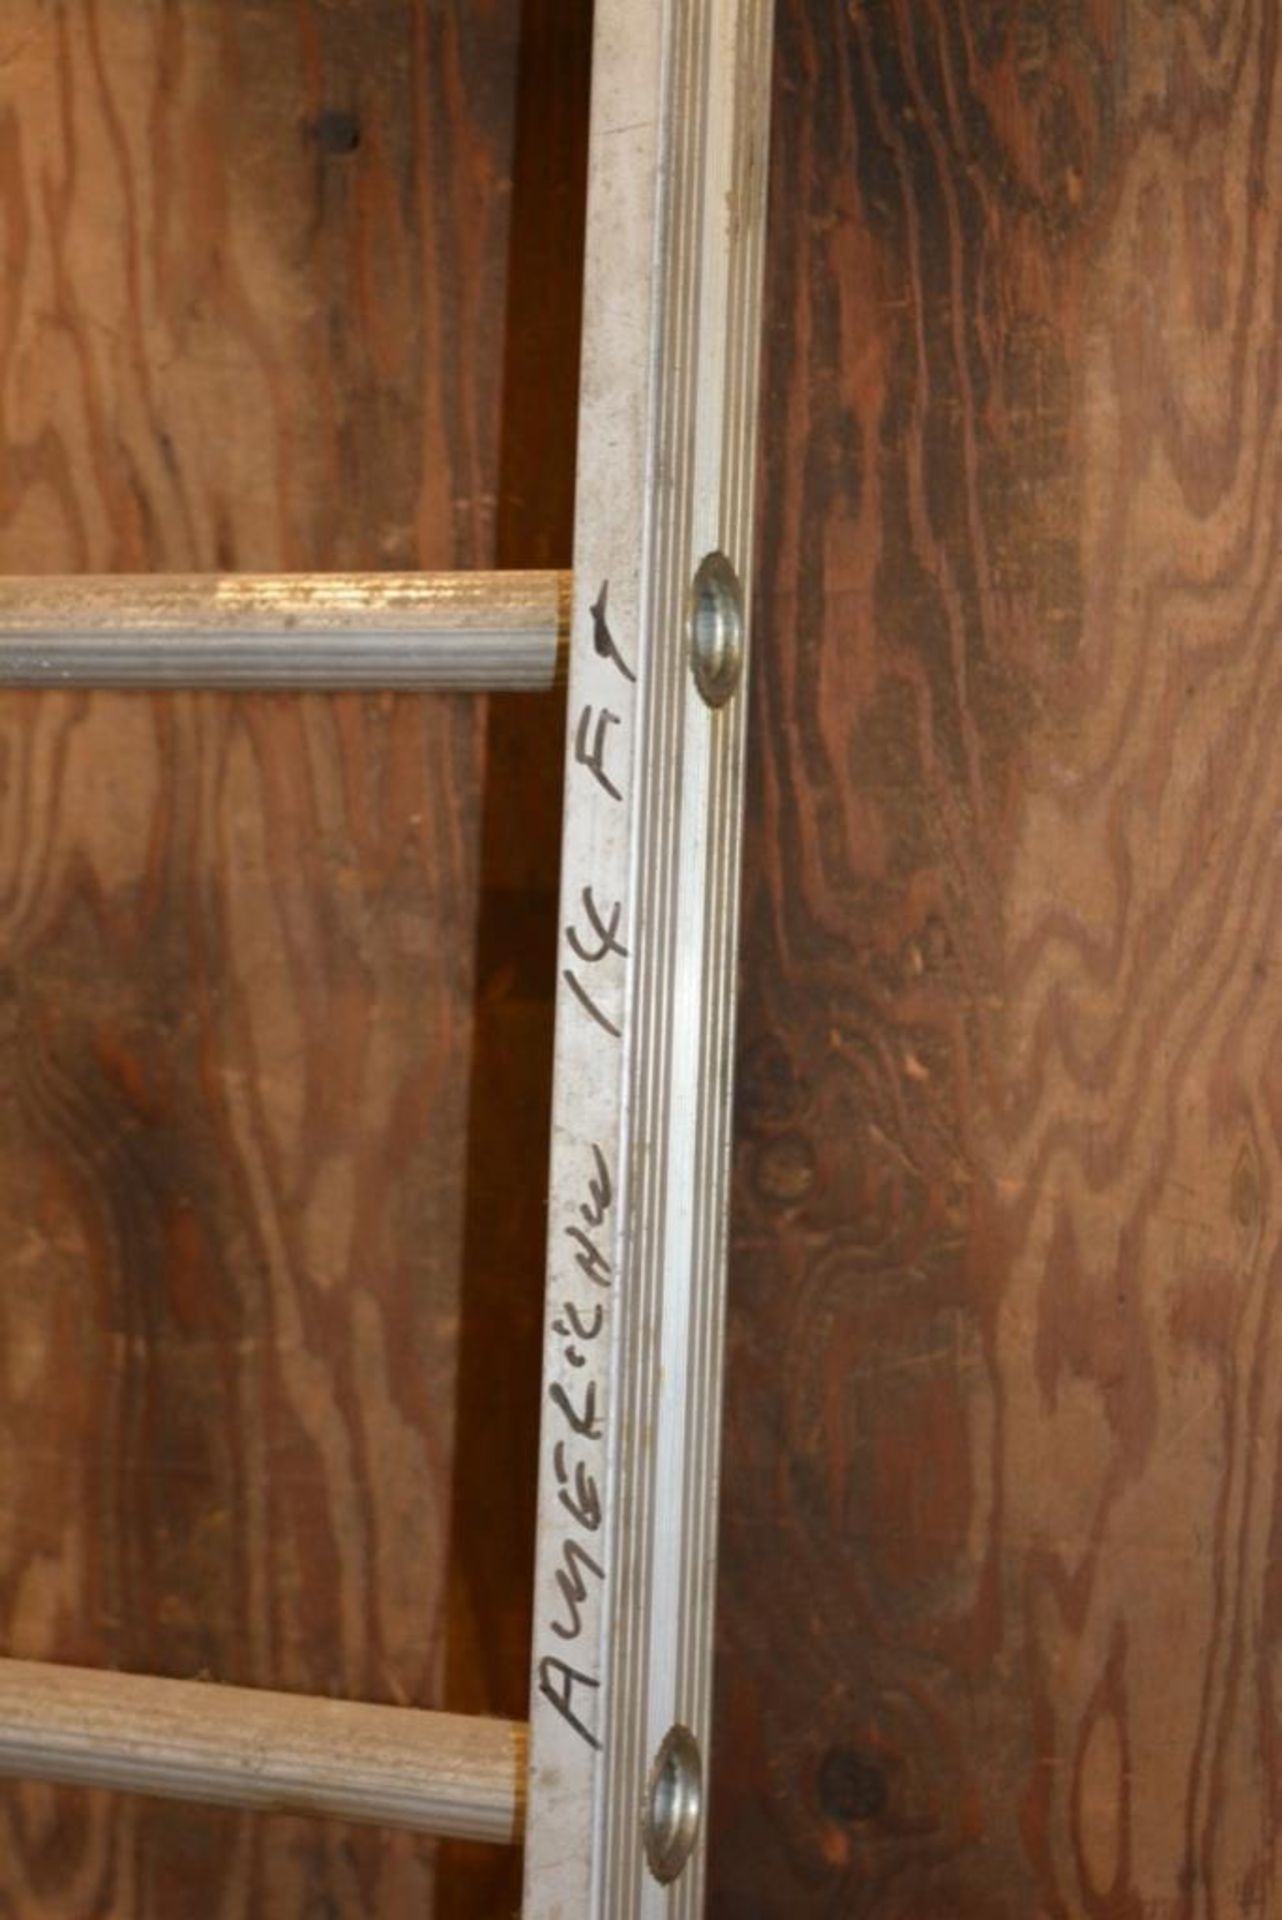 American 14' Aluminum Straight Ladder - Image 2 of 3